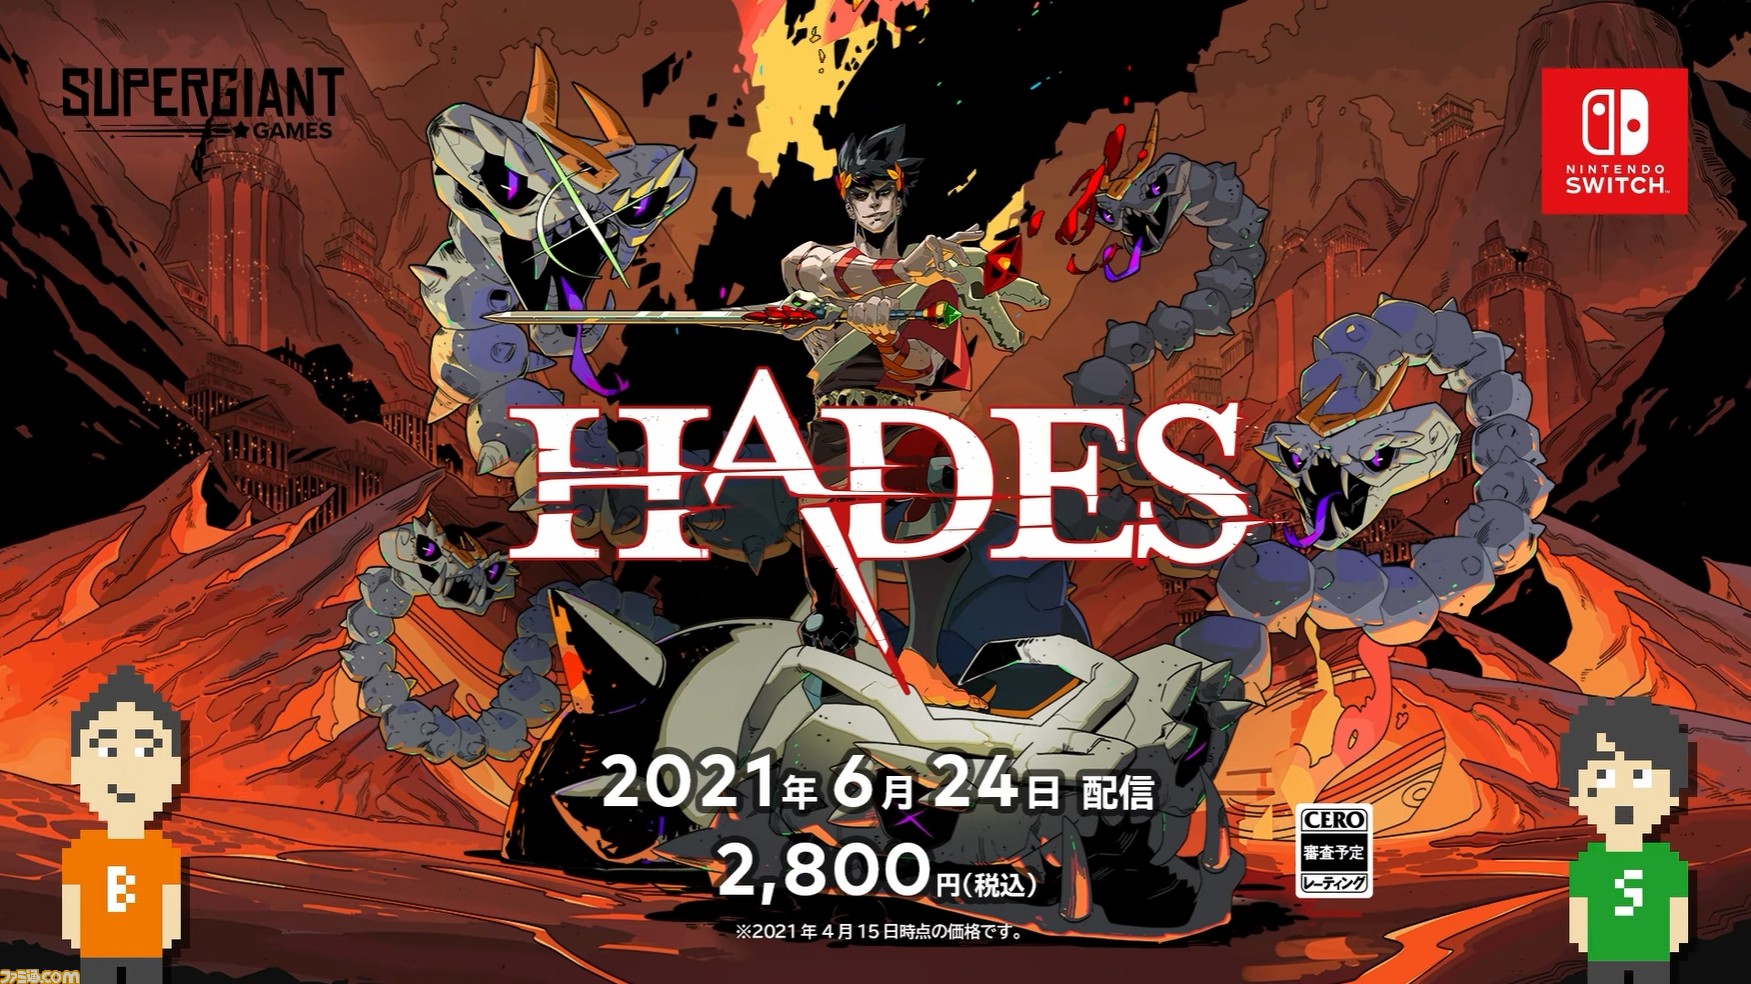 Switch ハデス が6月24日に配信決定 世界のゲームアワードで絶賛されるローグライクアクション ファミ通 Com